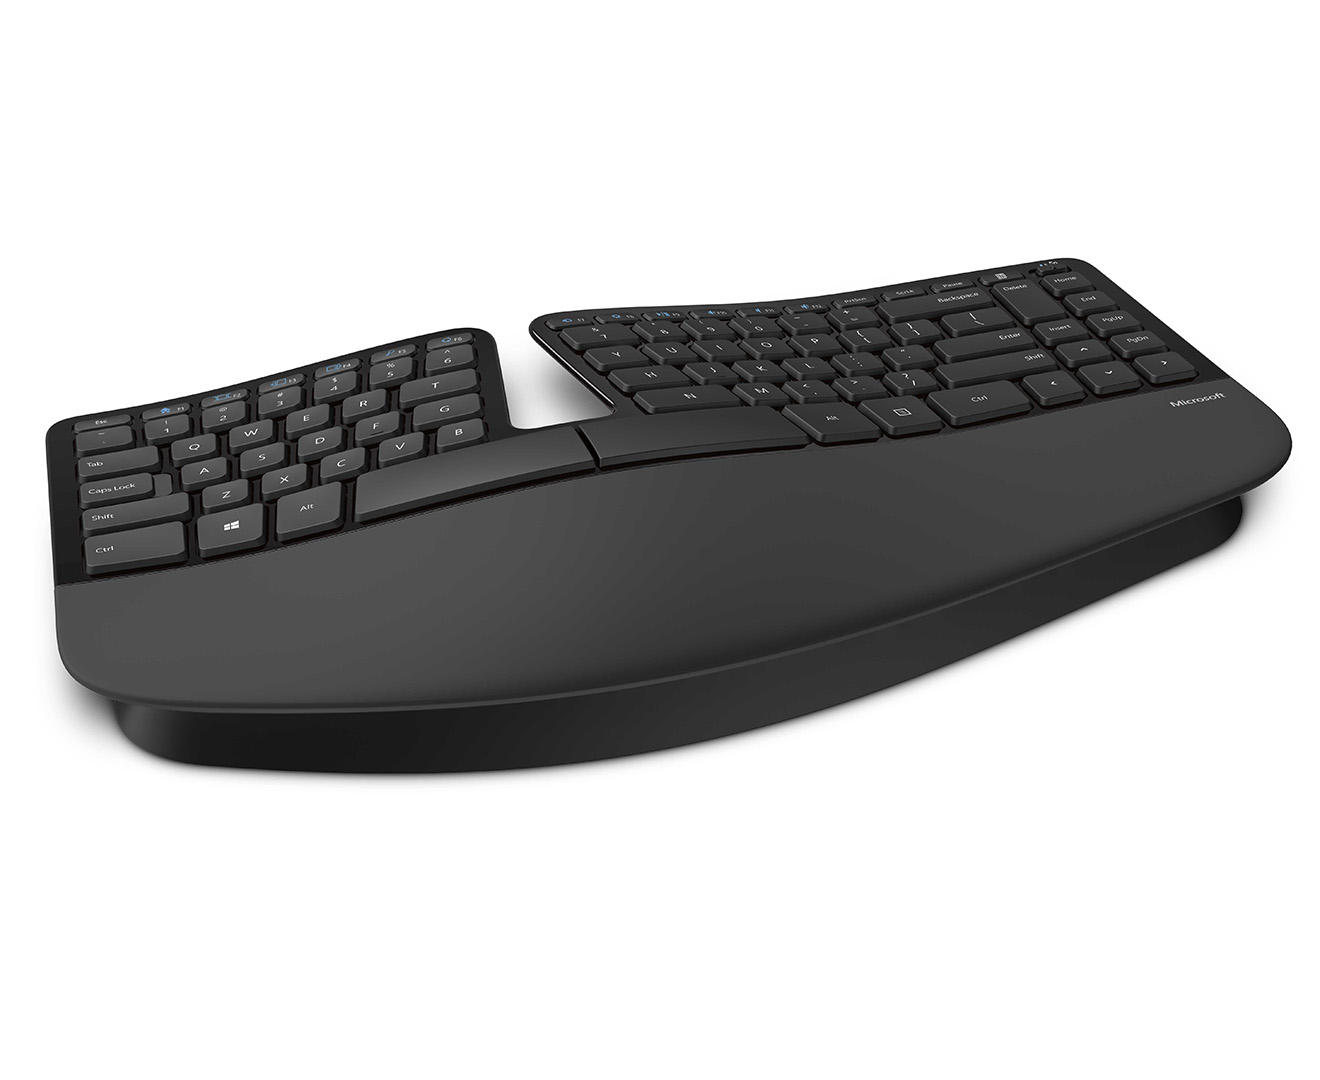 Microsoft Sculpt Ergonomic Keyboard 